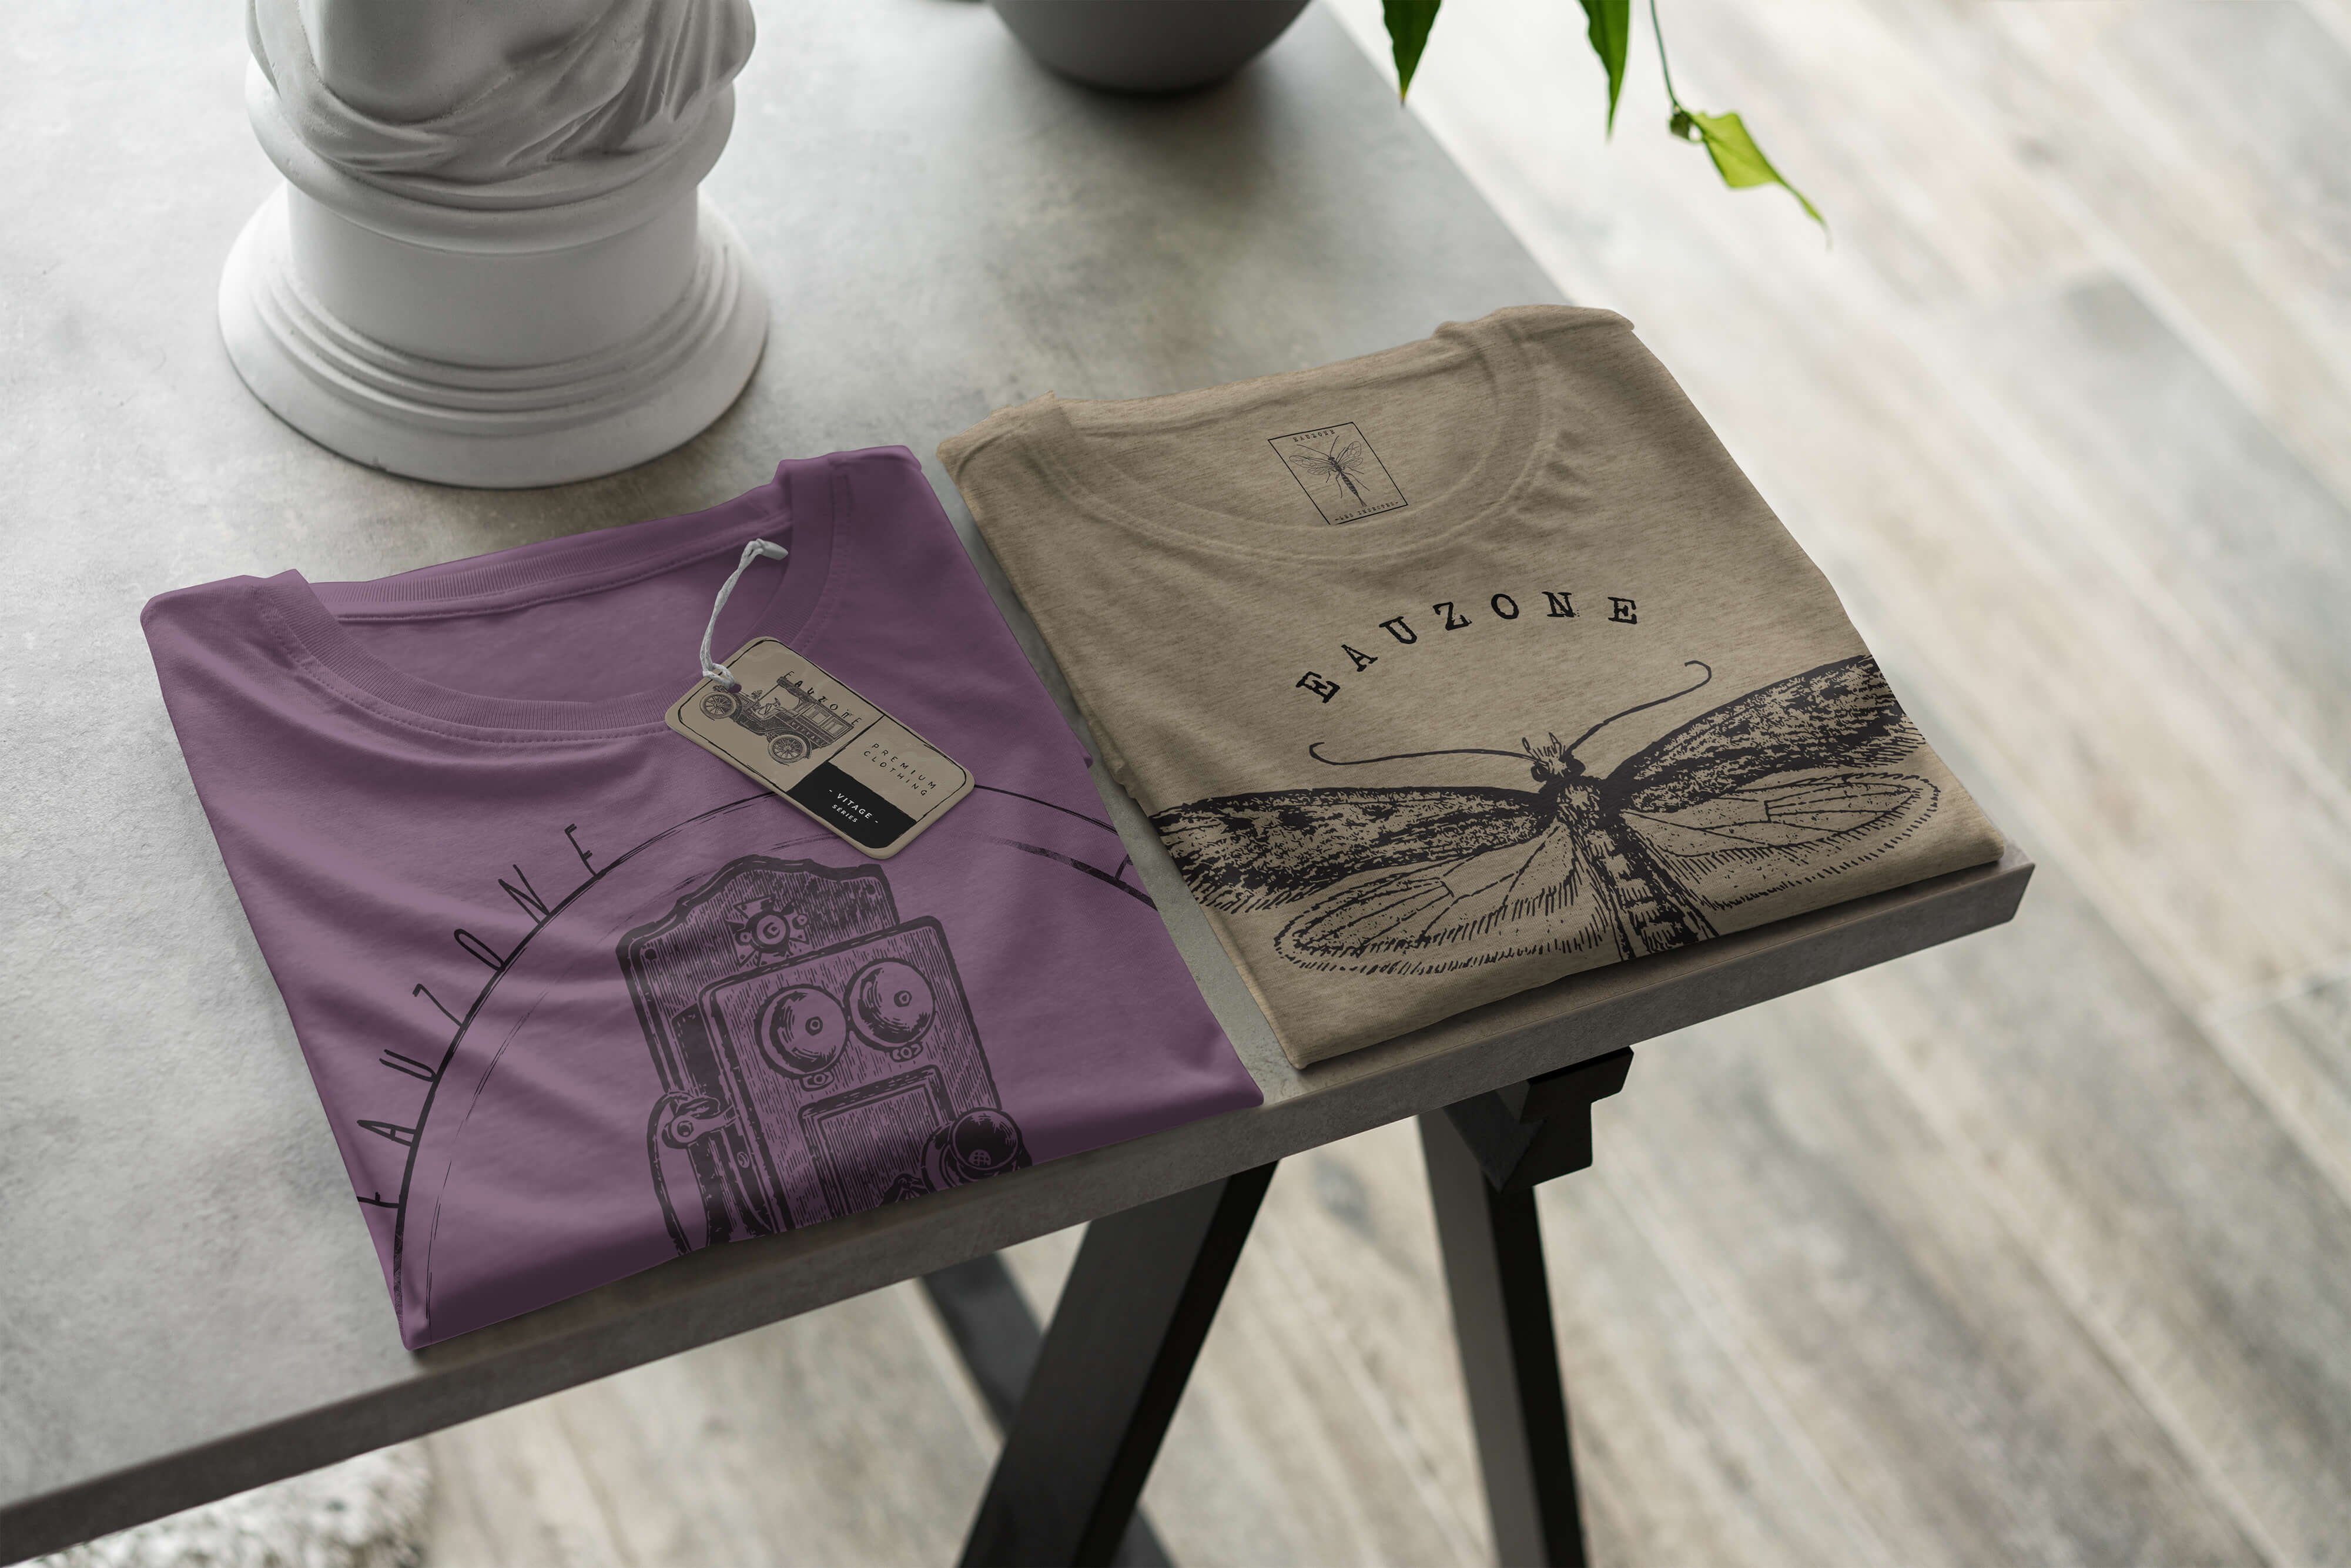 Sinus Art T-Shirt Shiraz Telefonkasten Herren Vintage T-Shirt